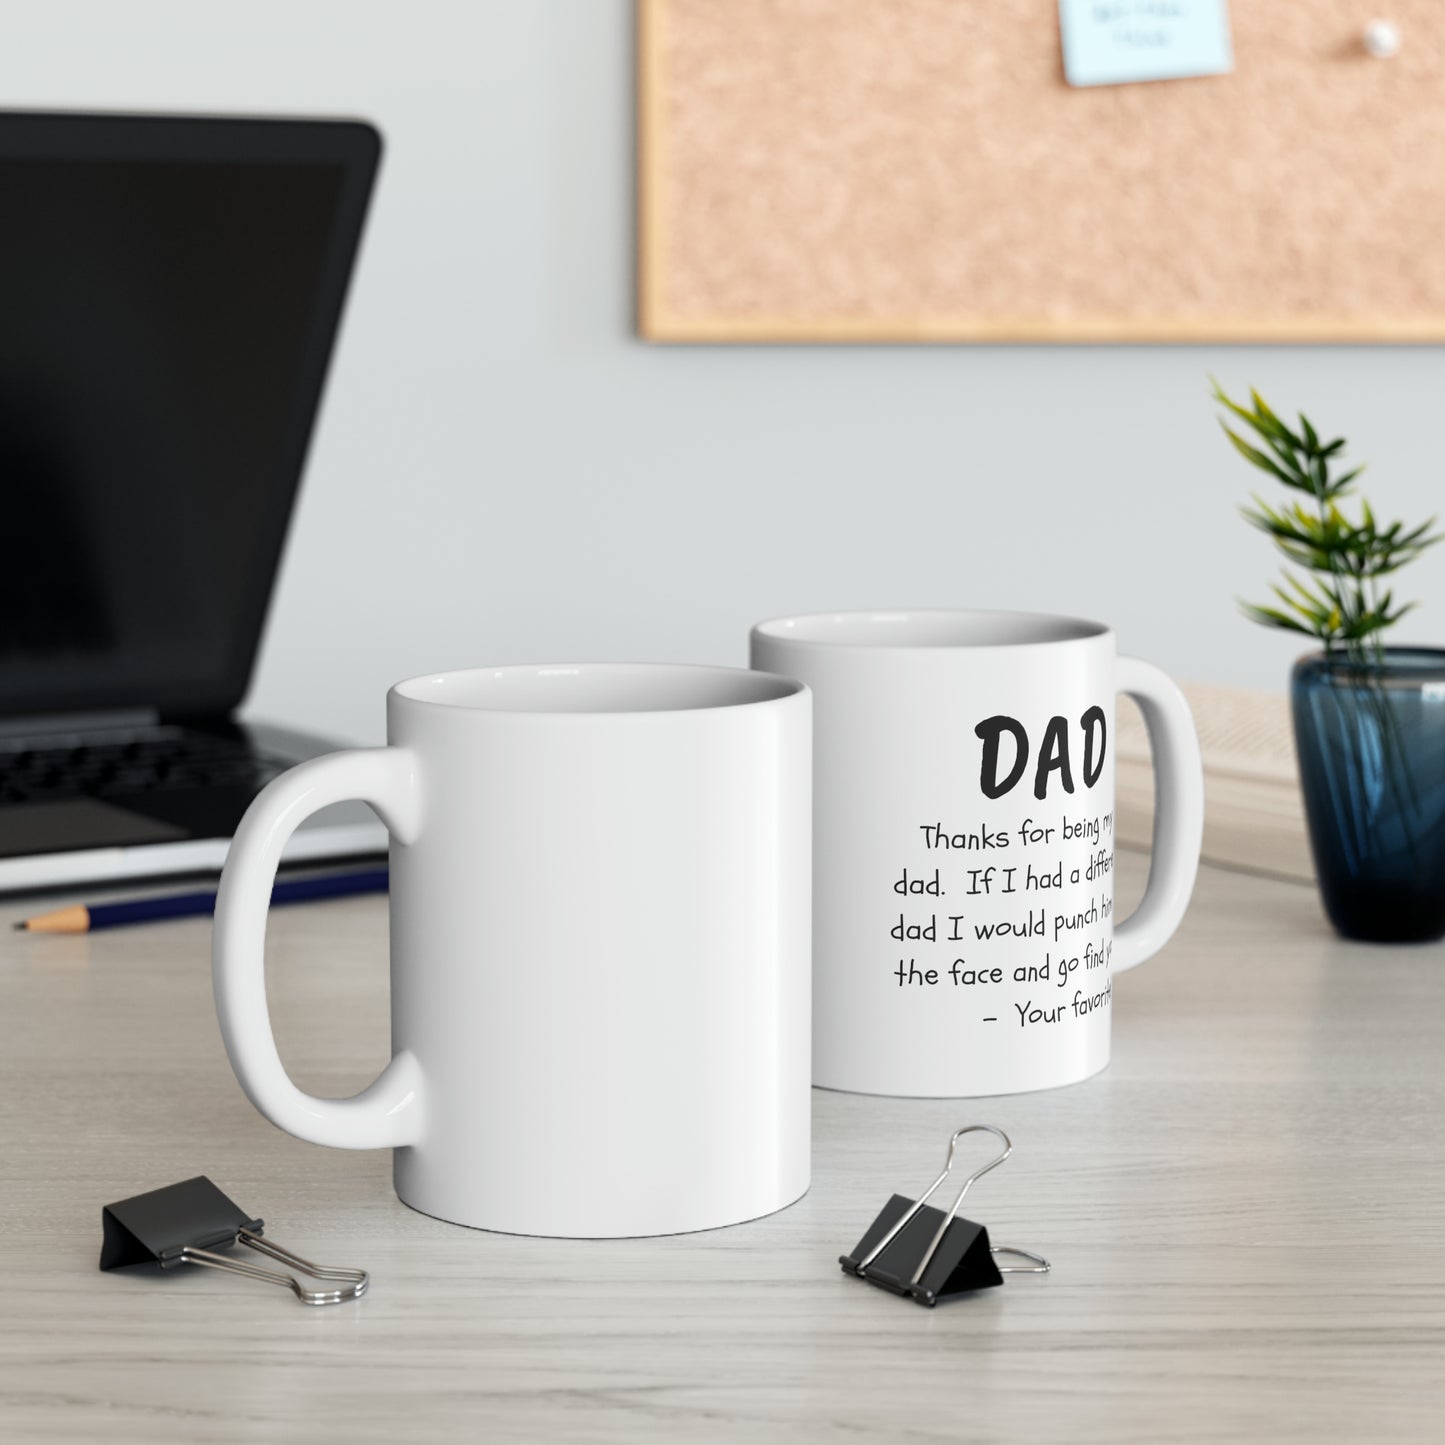 For Dad | Father's Day/Birthday gift/Ceramic Mug, 11oz